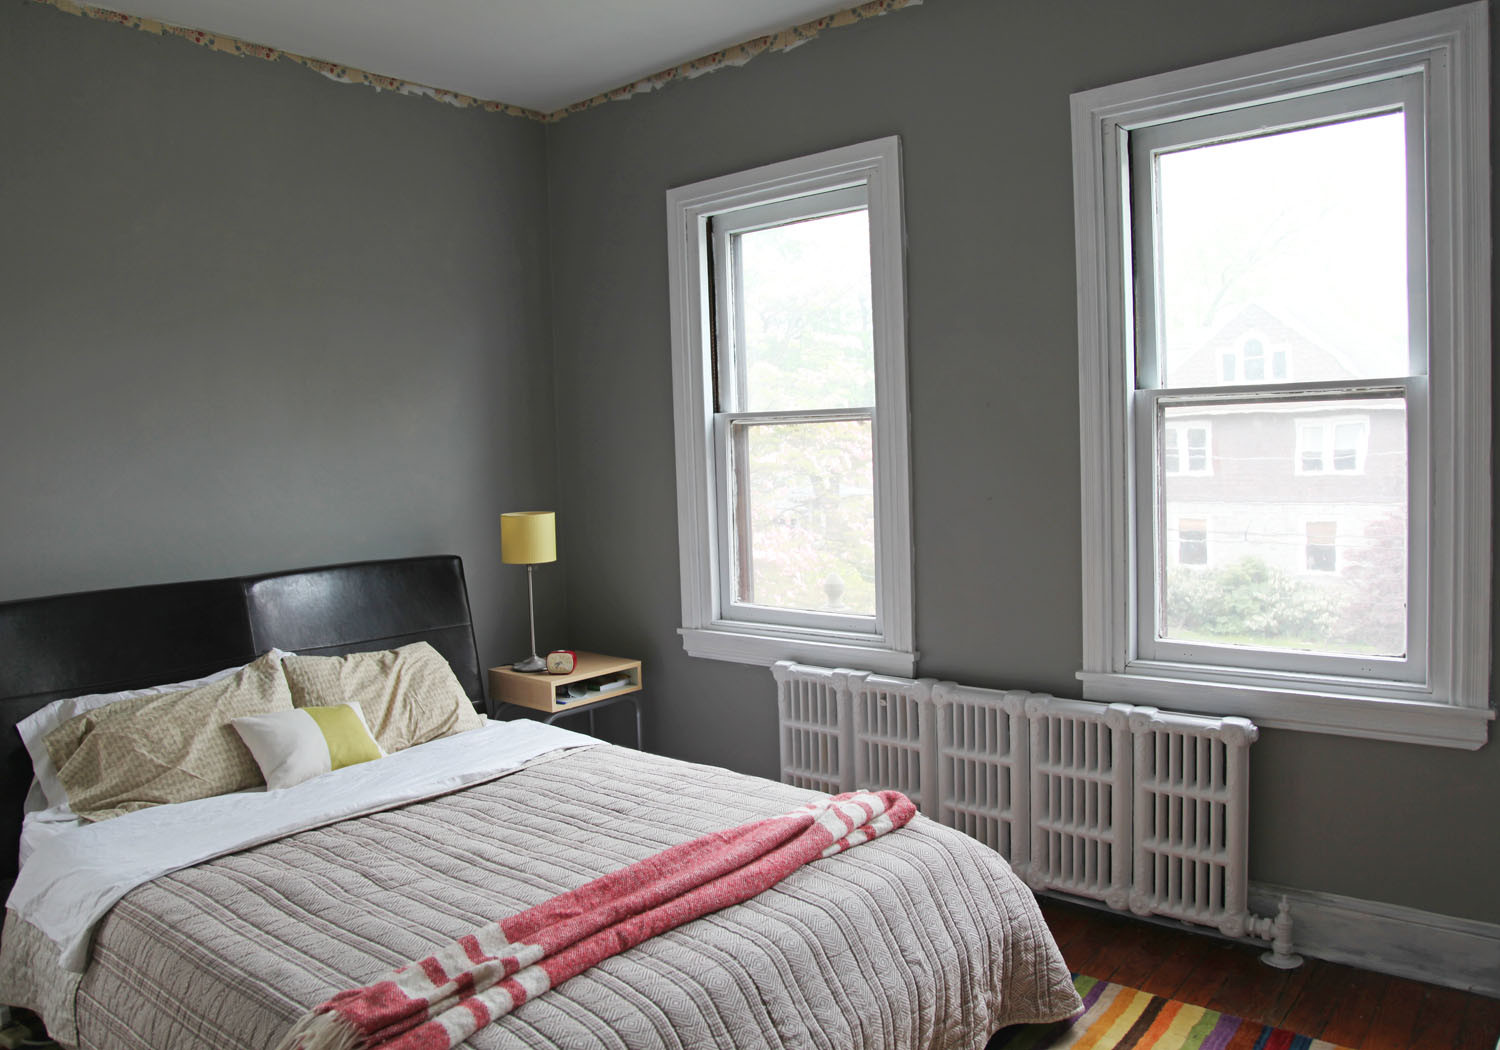 Grey Bedroom Walls
 Master Bedroom New Gray Wall Color & White Trim